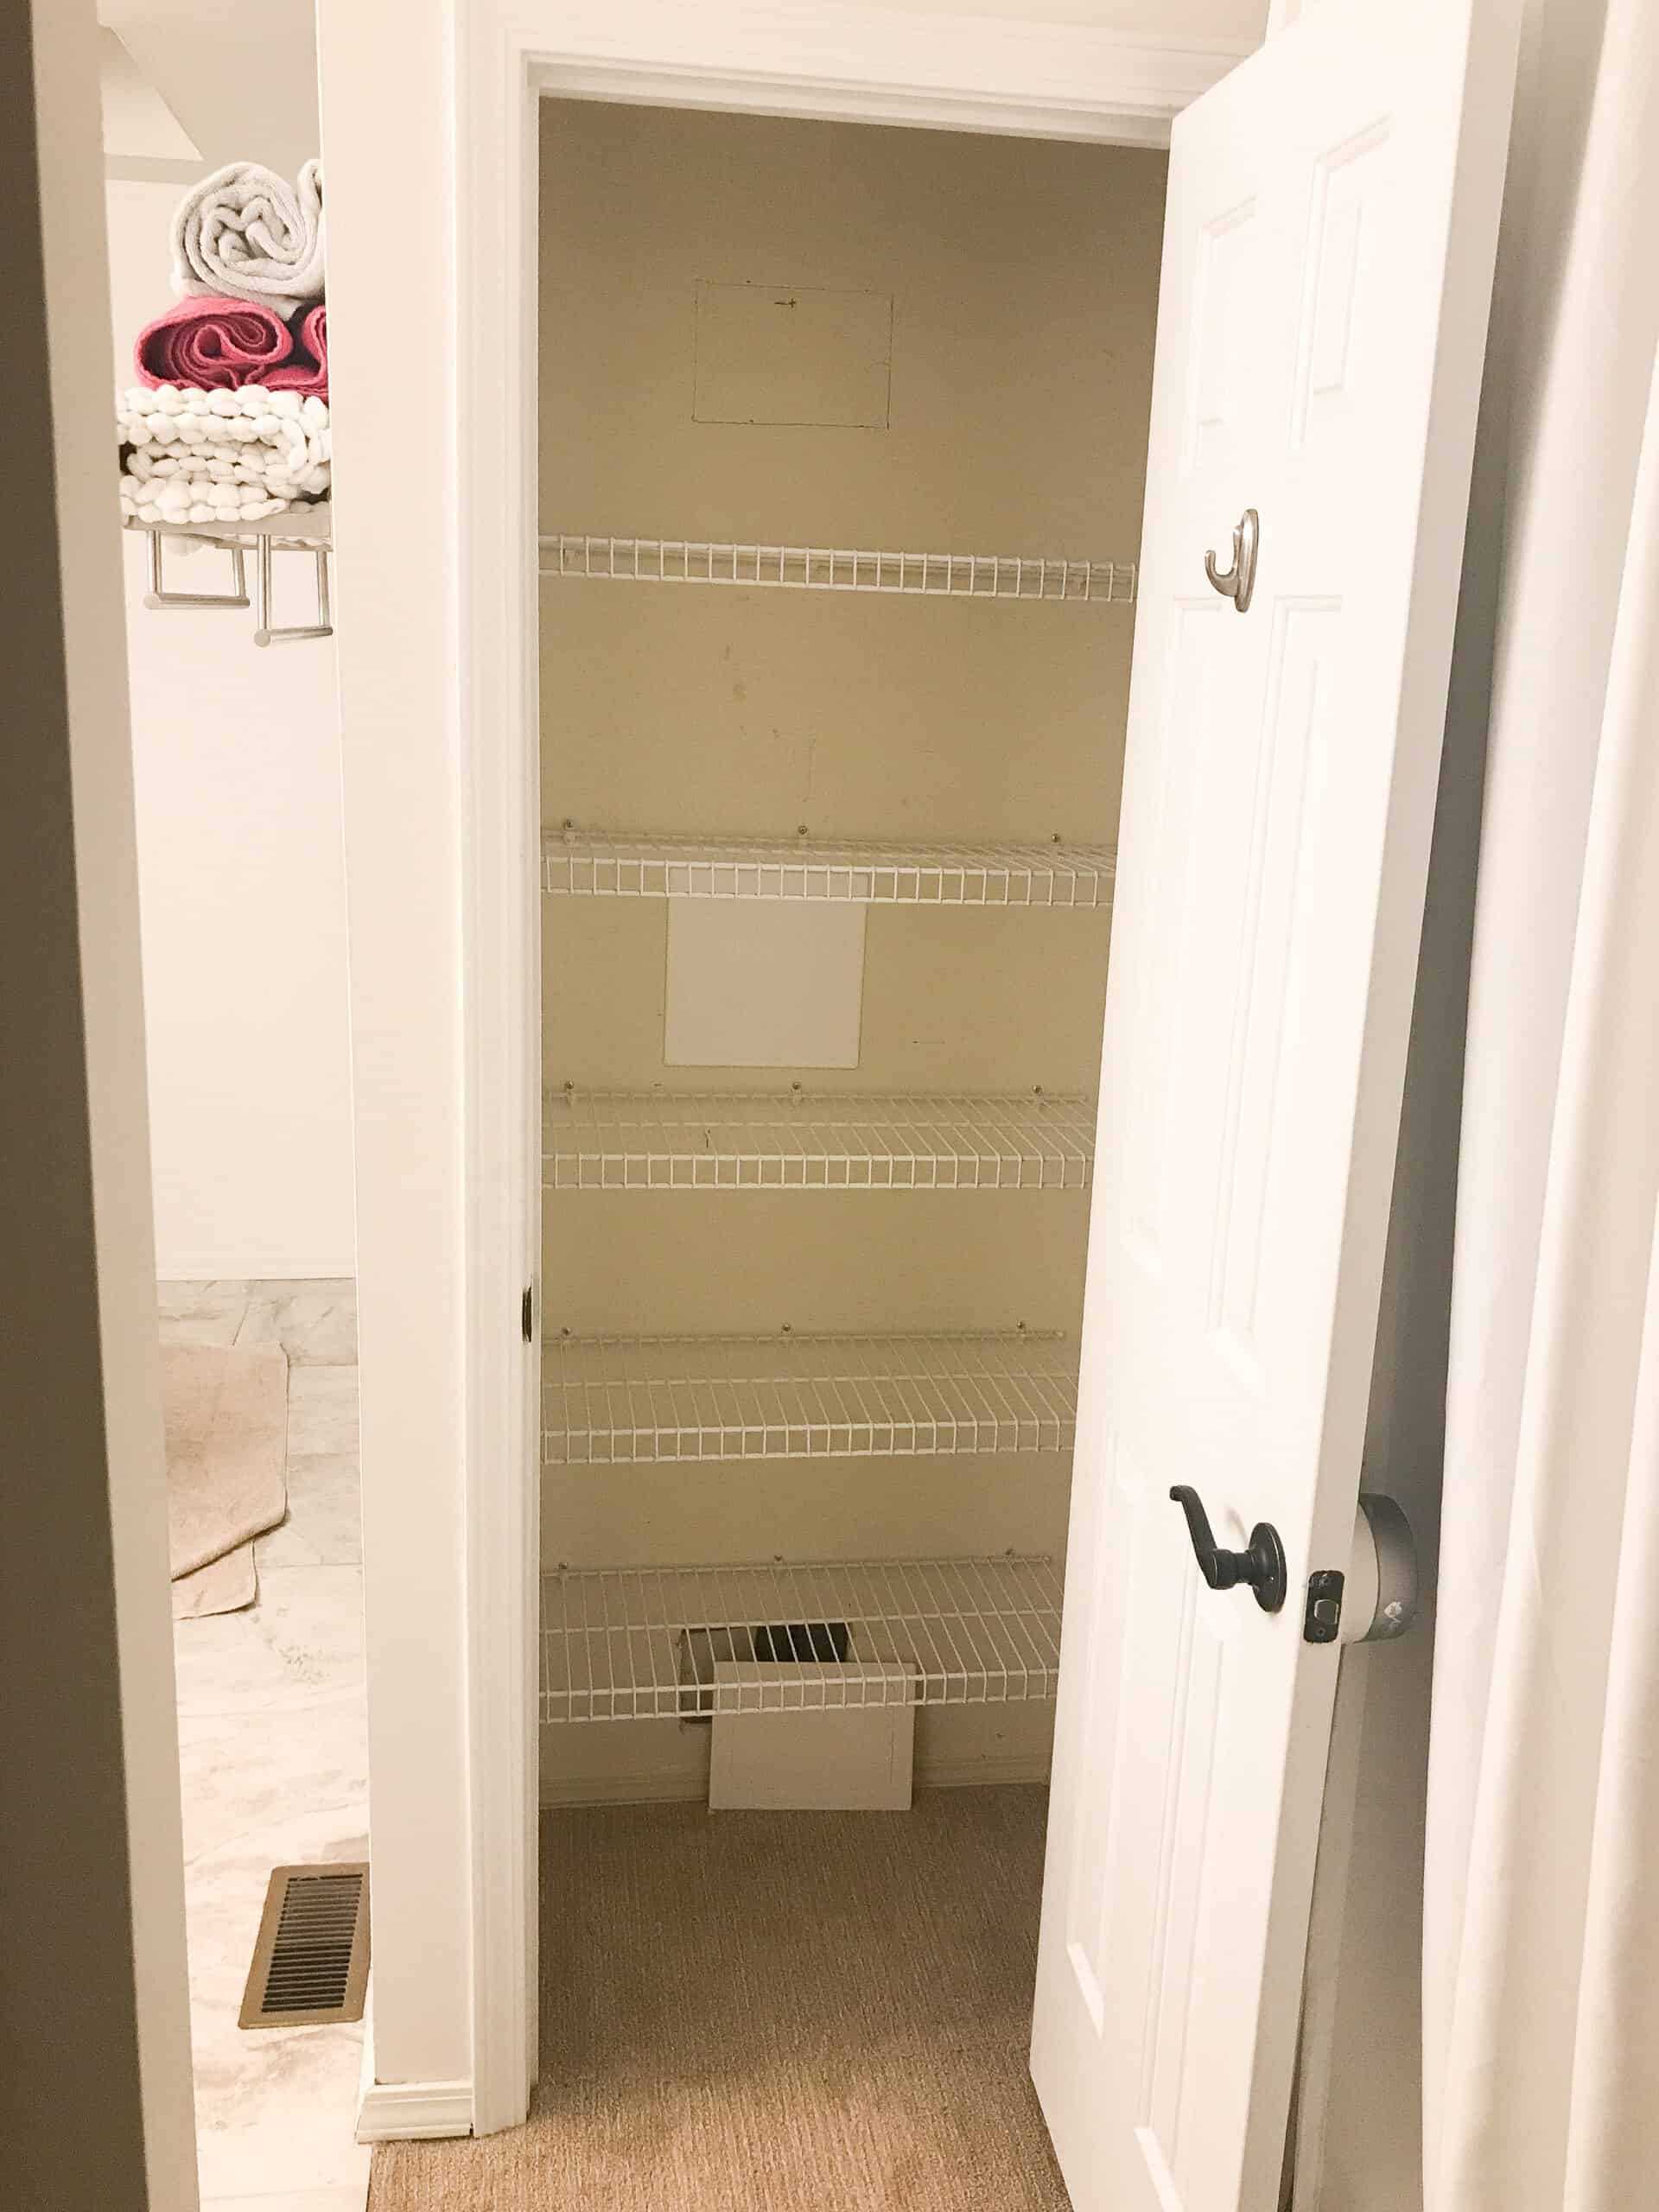 https://arinsolangeathome.com/2020/01/19/diy-wood-closet-shelves/img_6610/